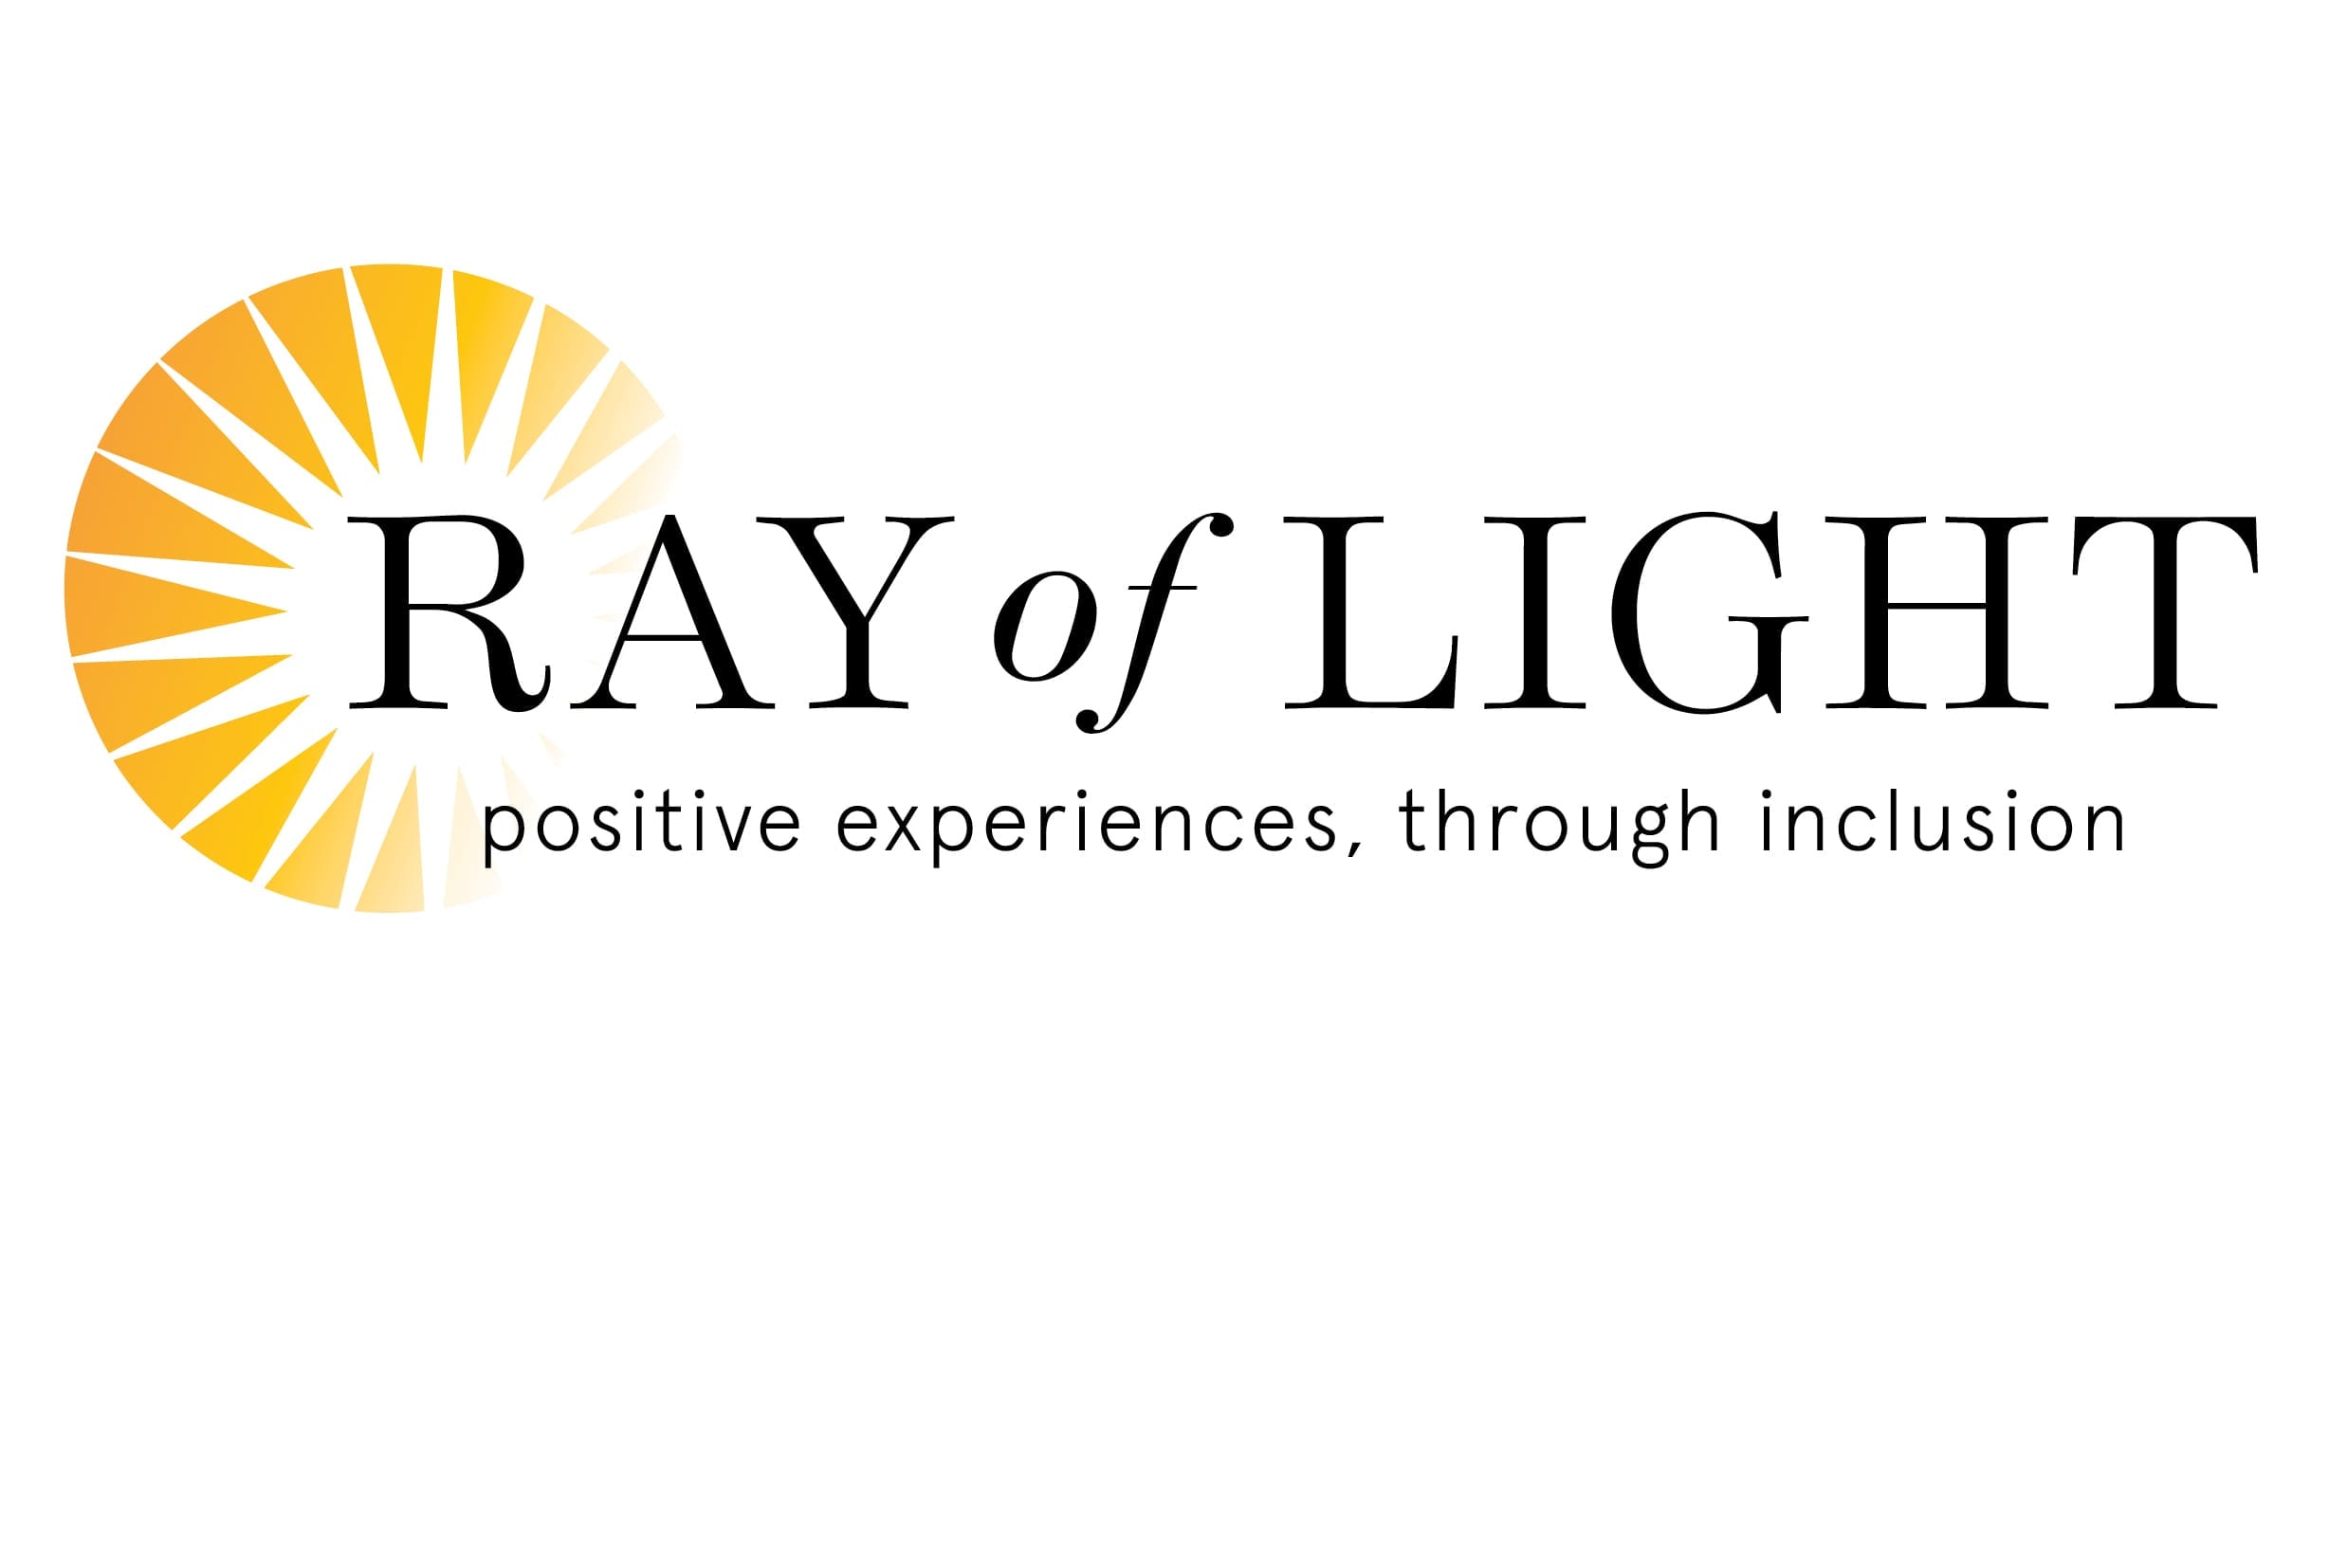 Ray of Light Logo: Positive experiences through inclusion